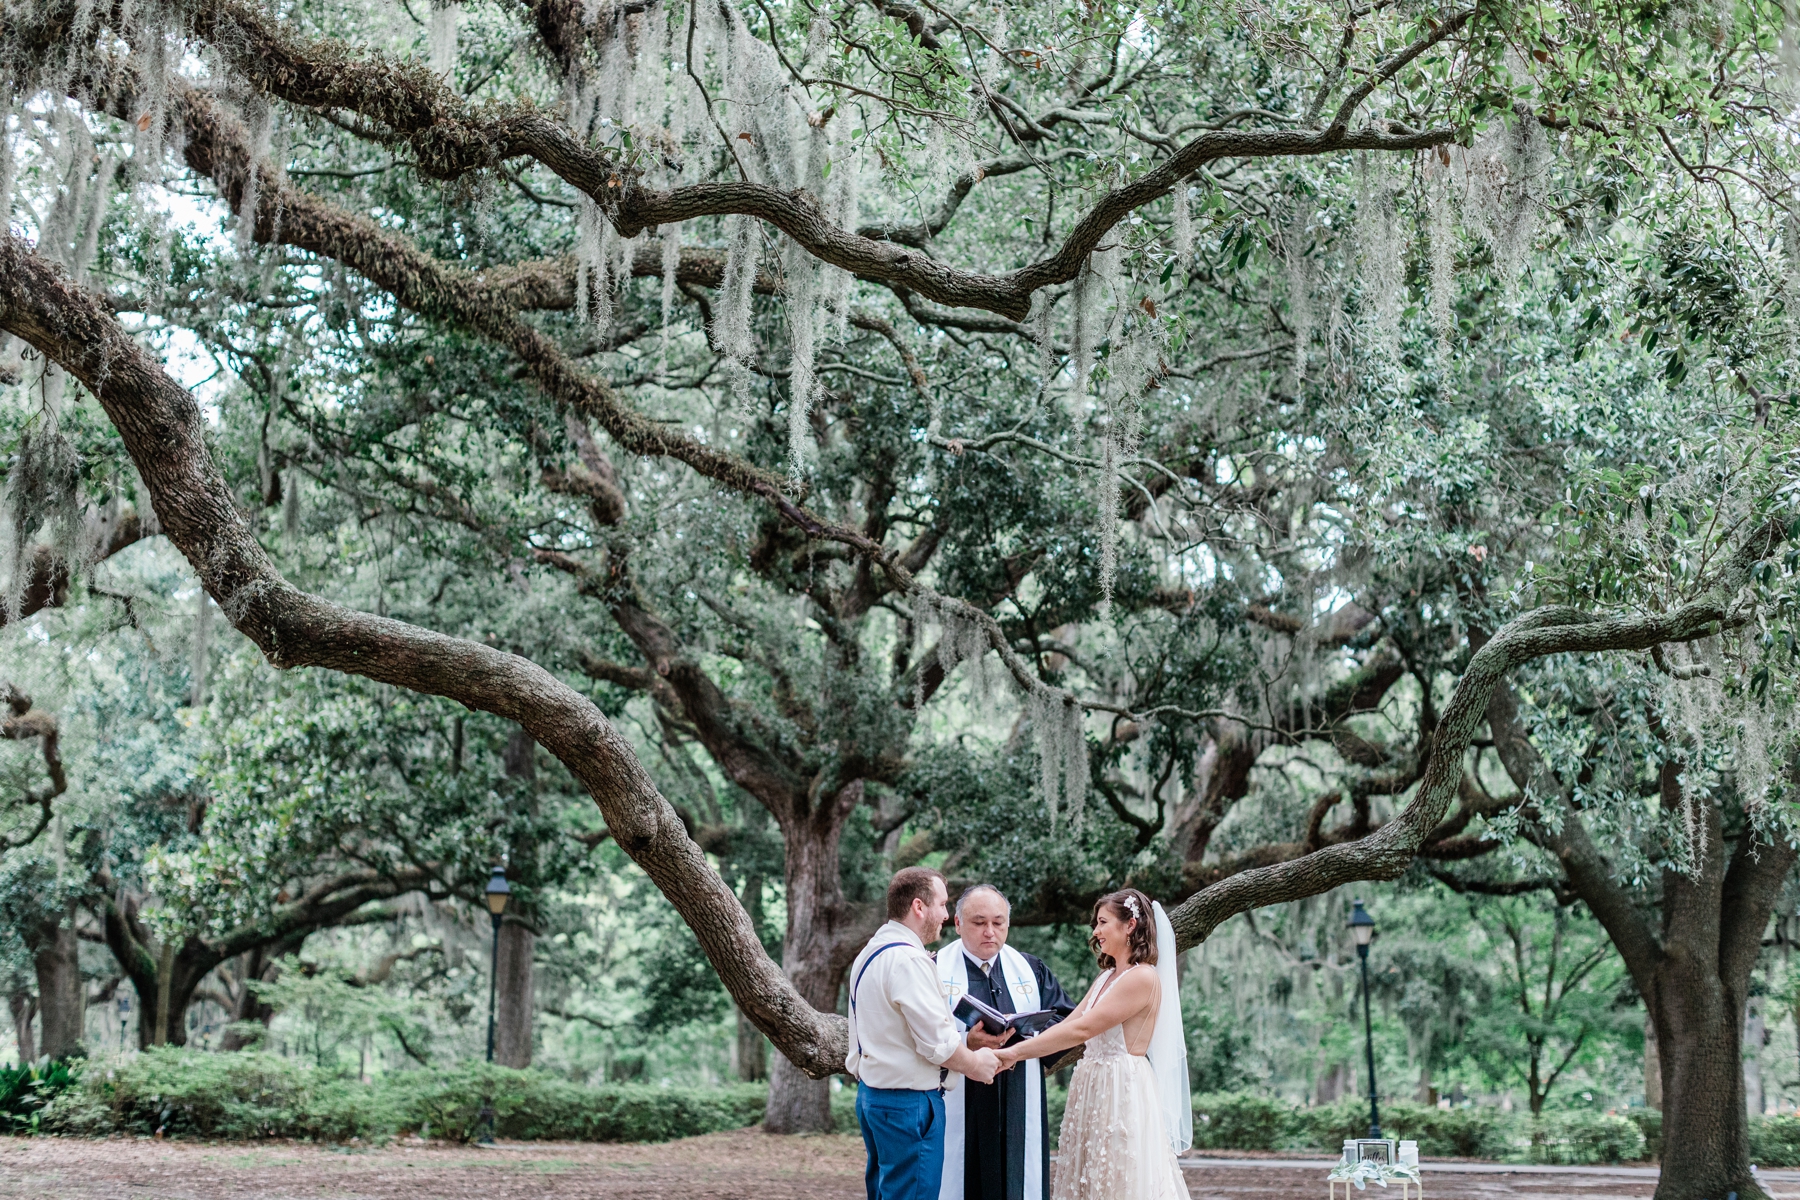 Intimate Forsyth Park Elopement in Savannah